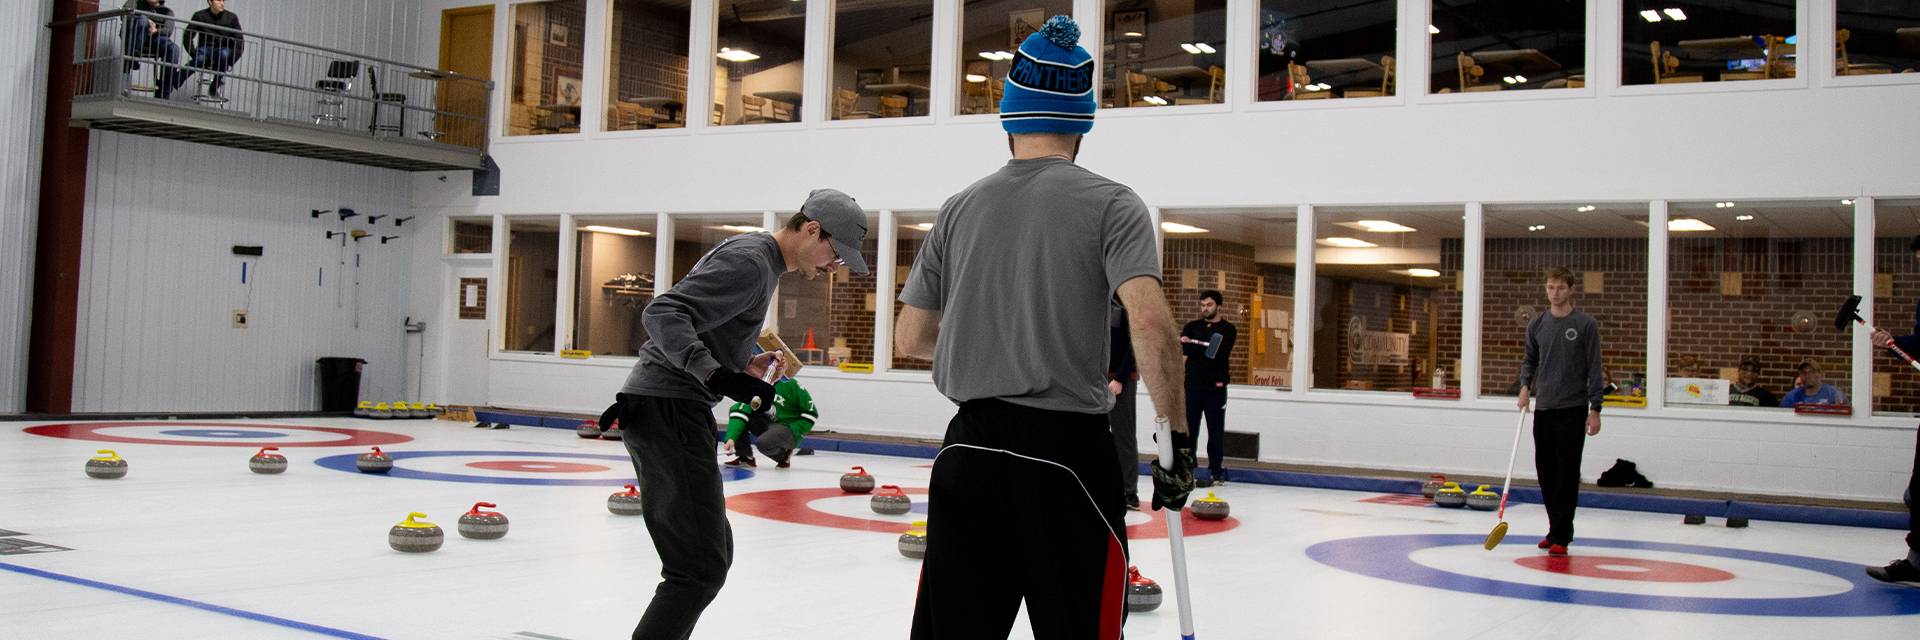 intramural curling